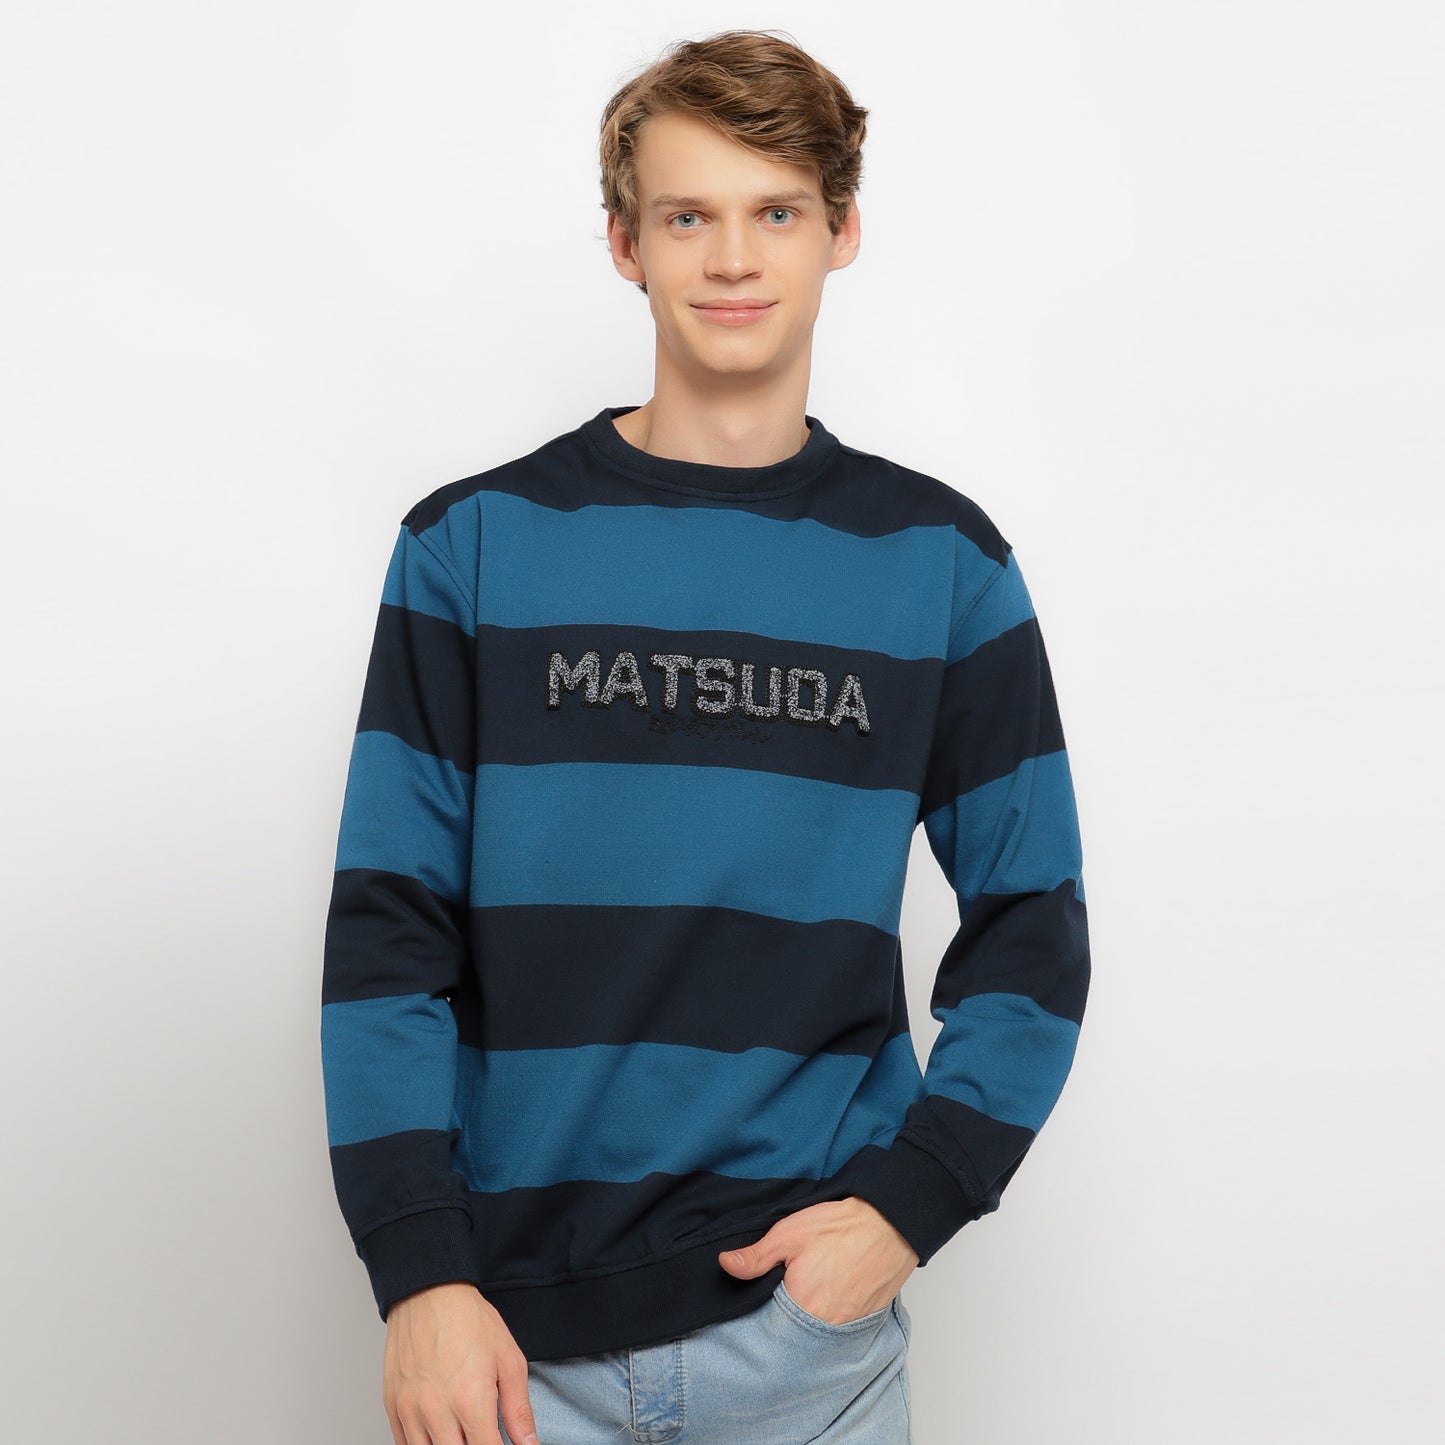 Matsuda Sweater Crewneck Ishioka